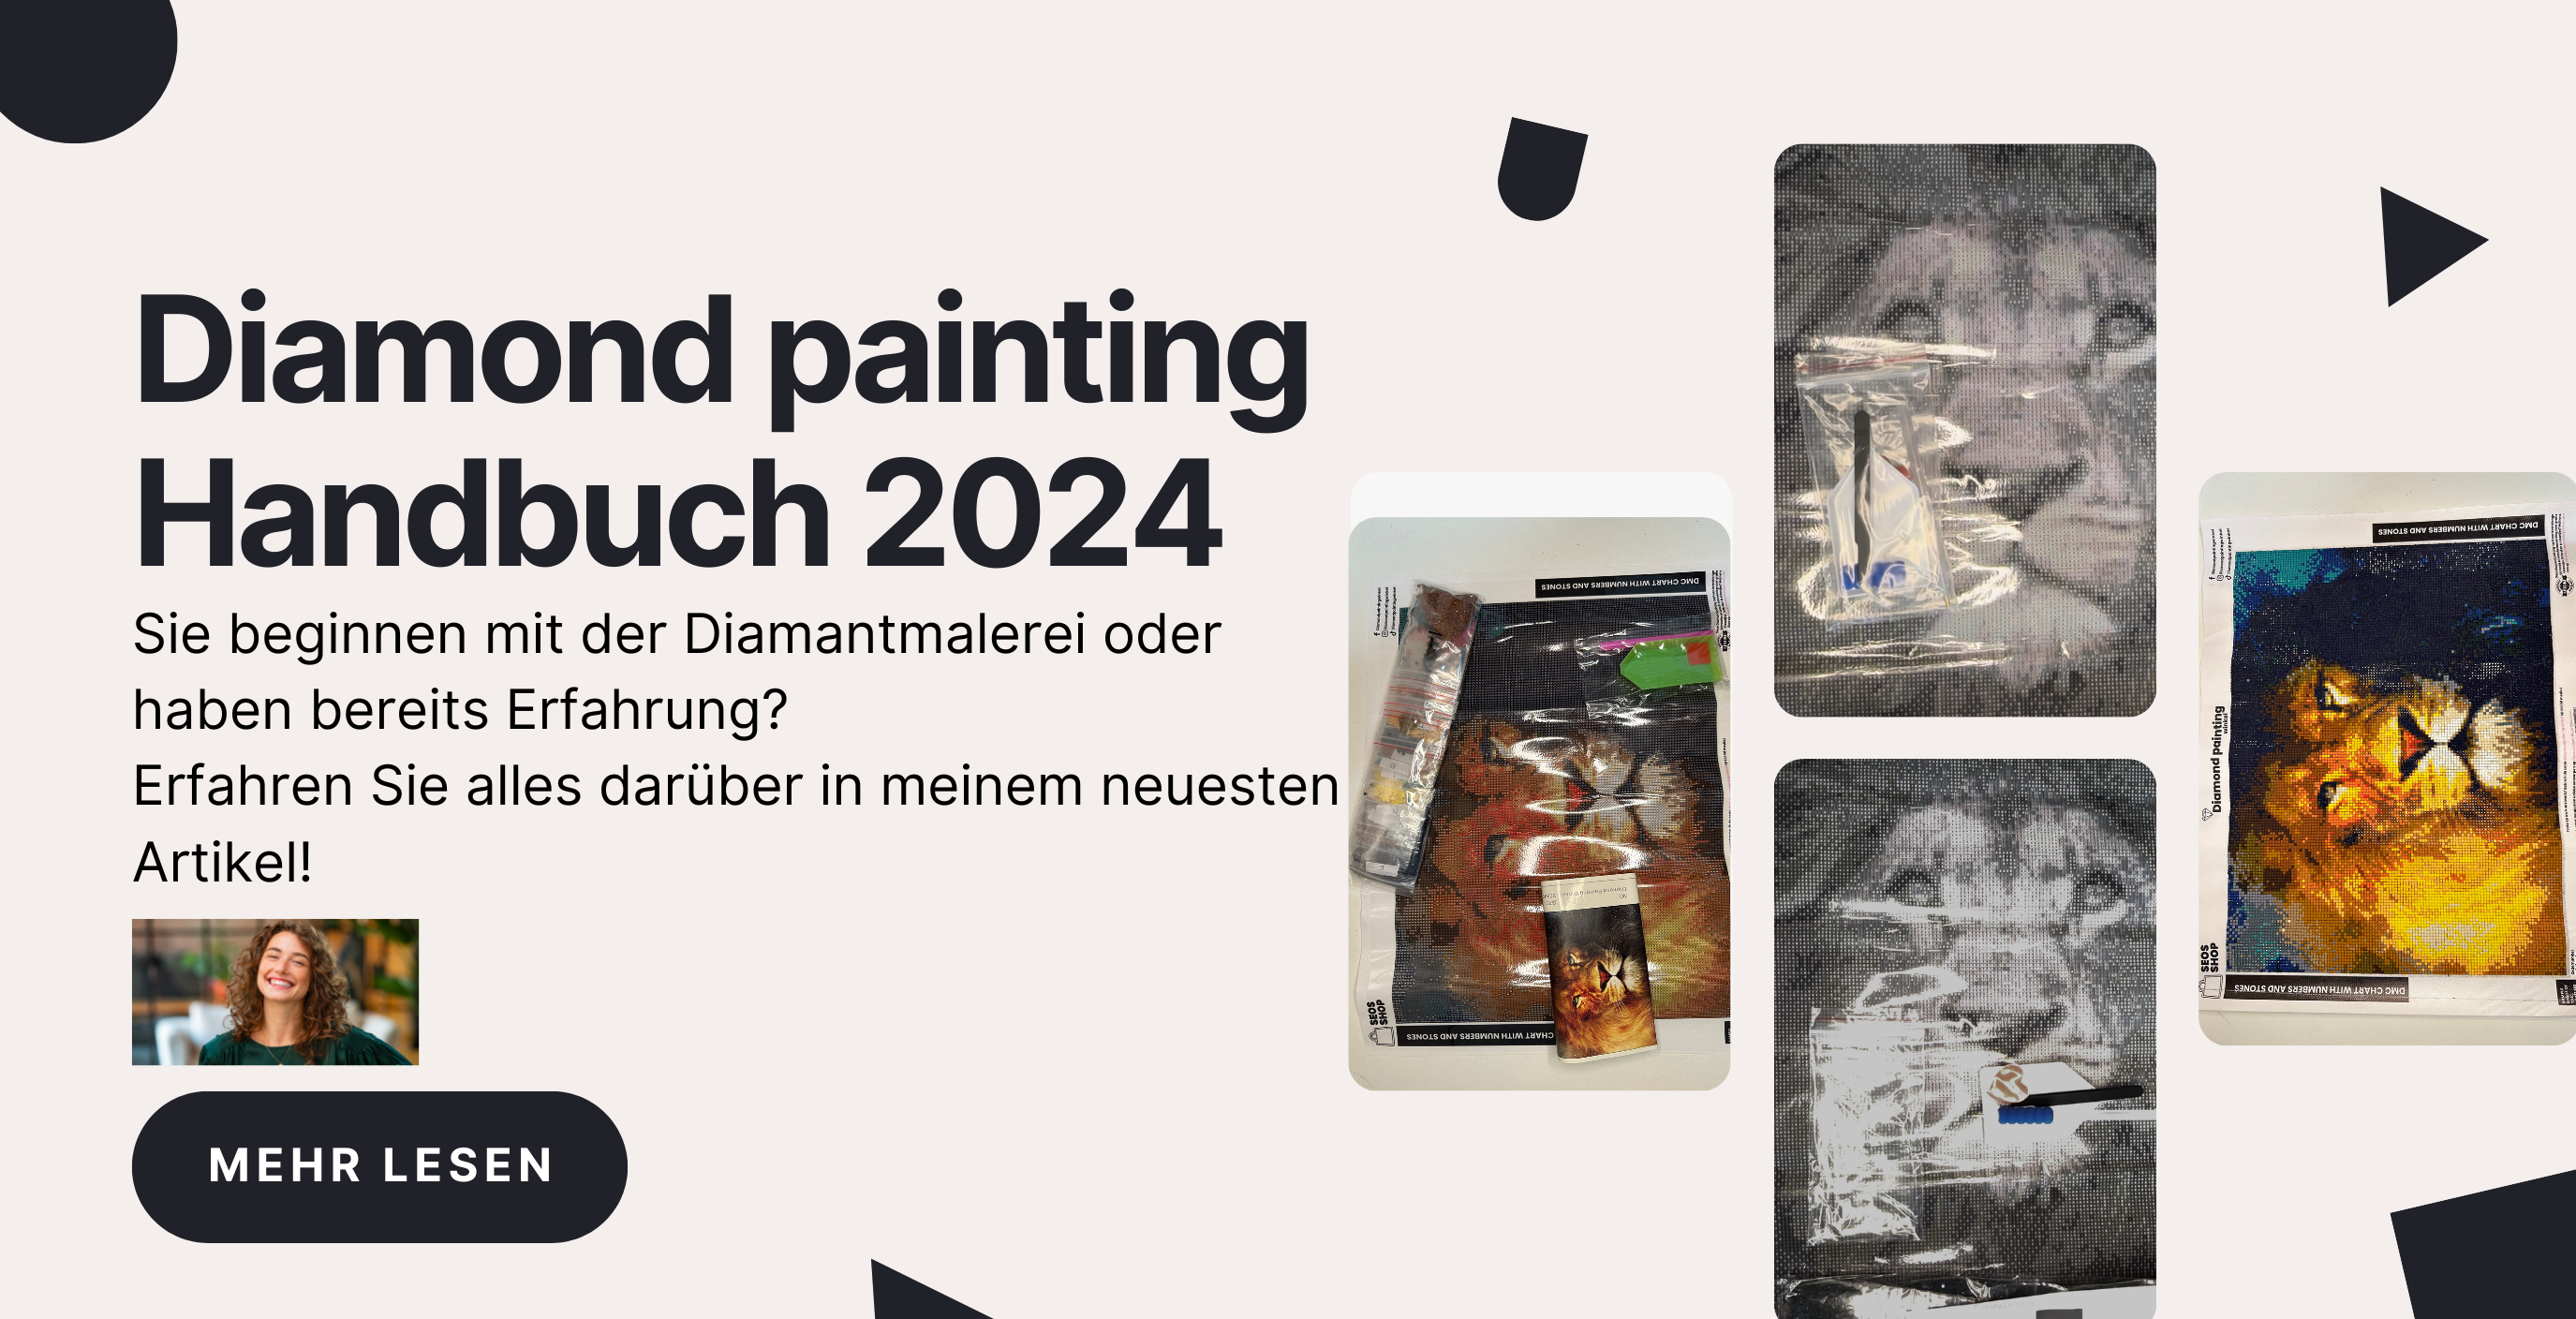 Handbuch diamond painting 2024